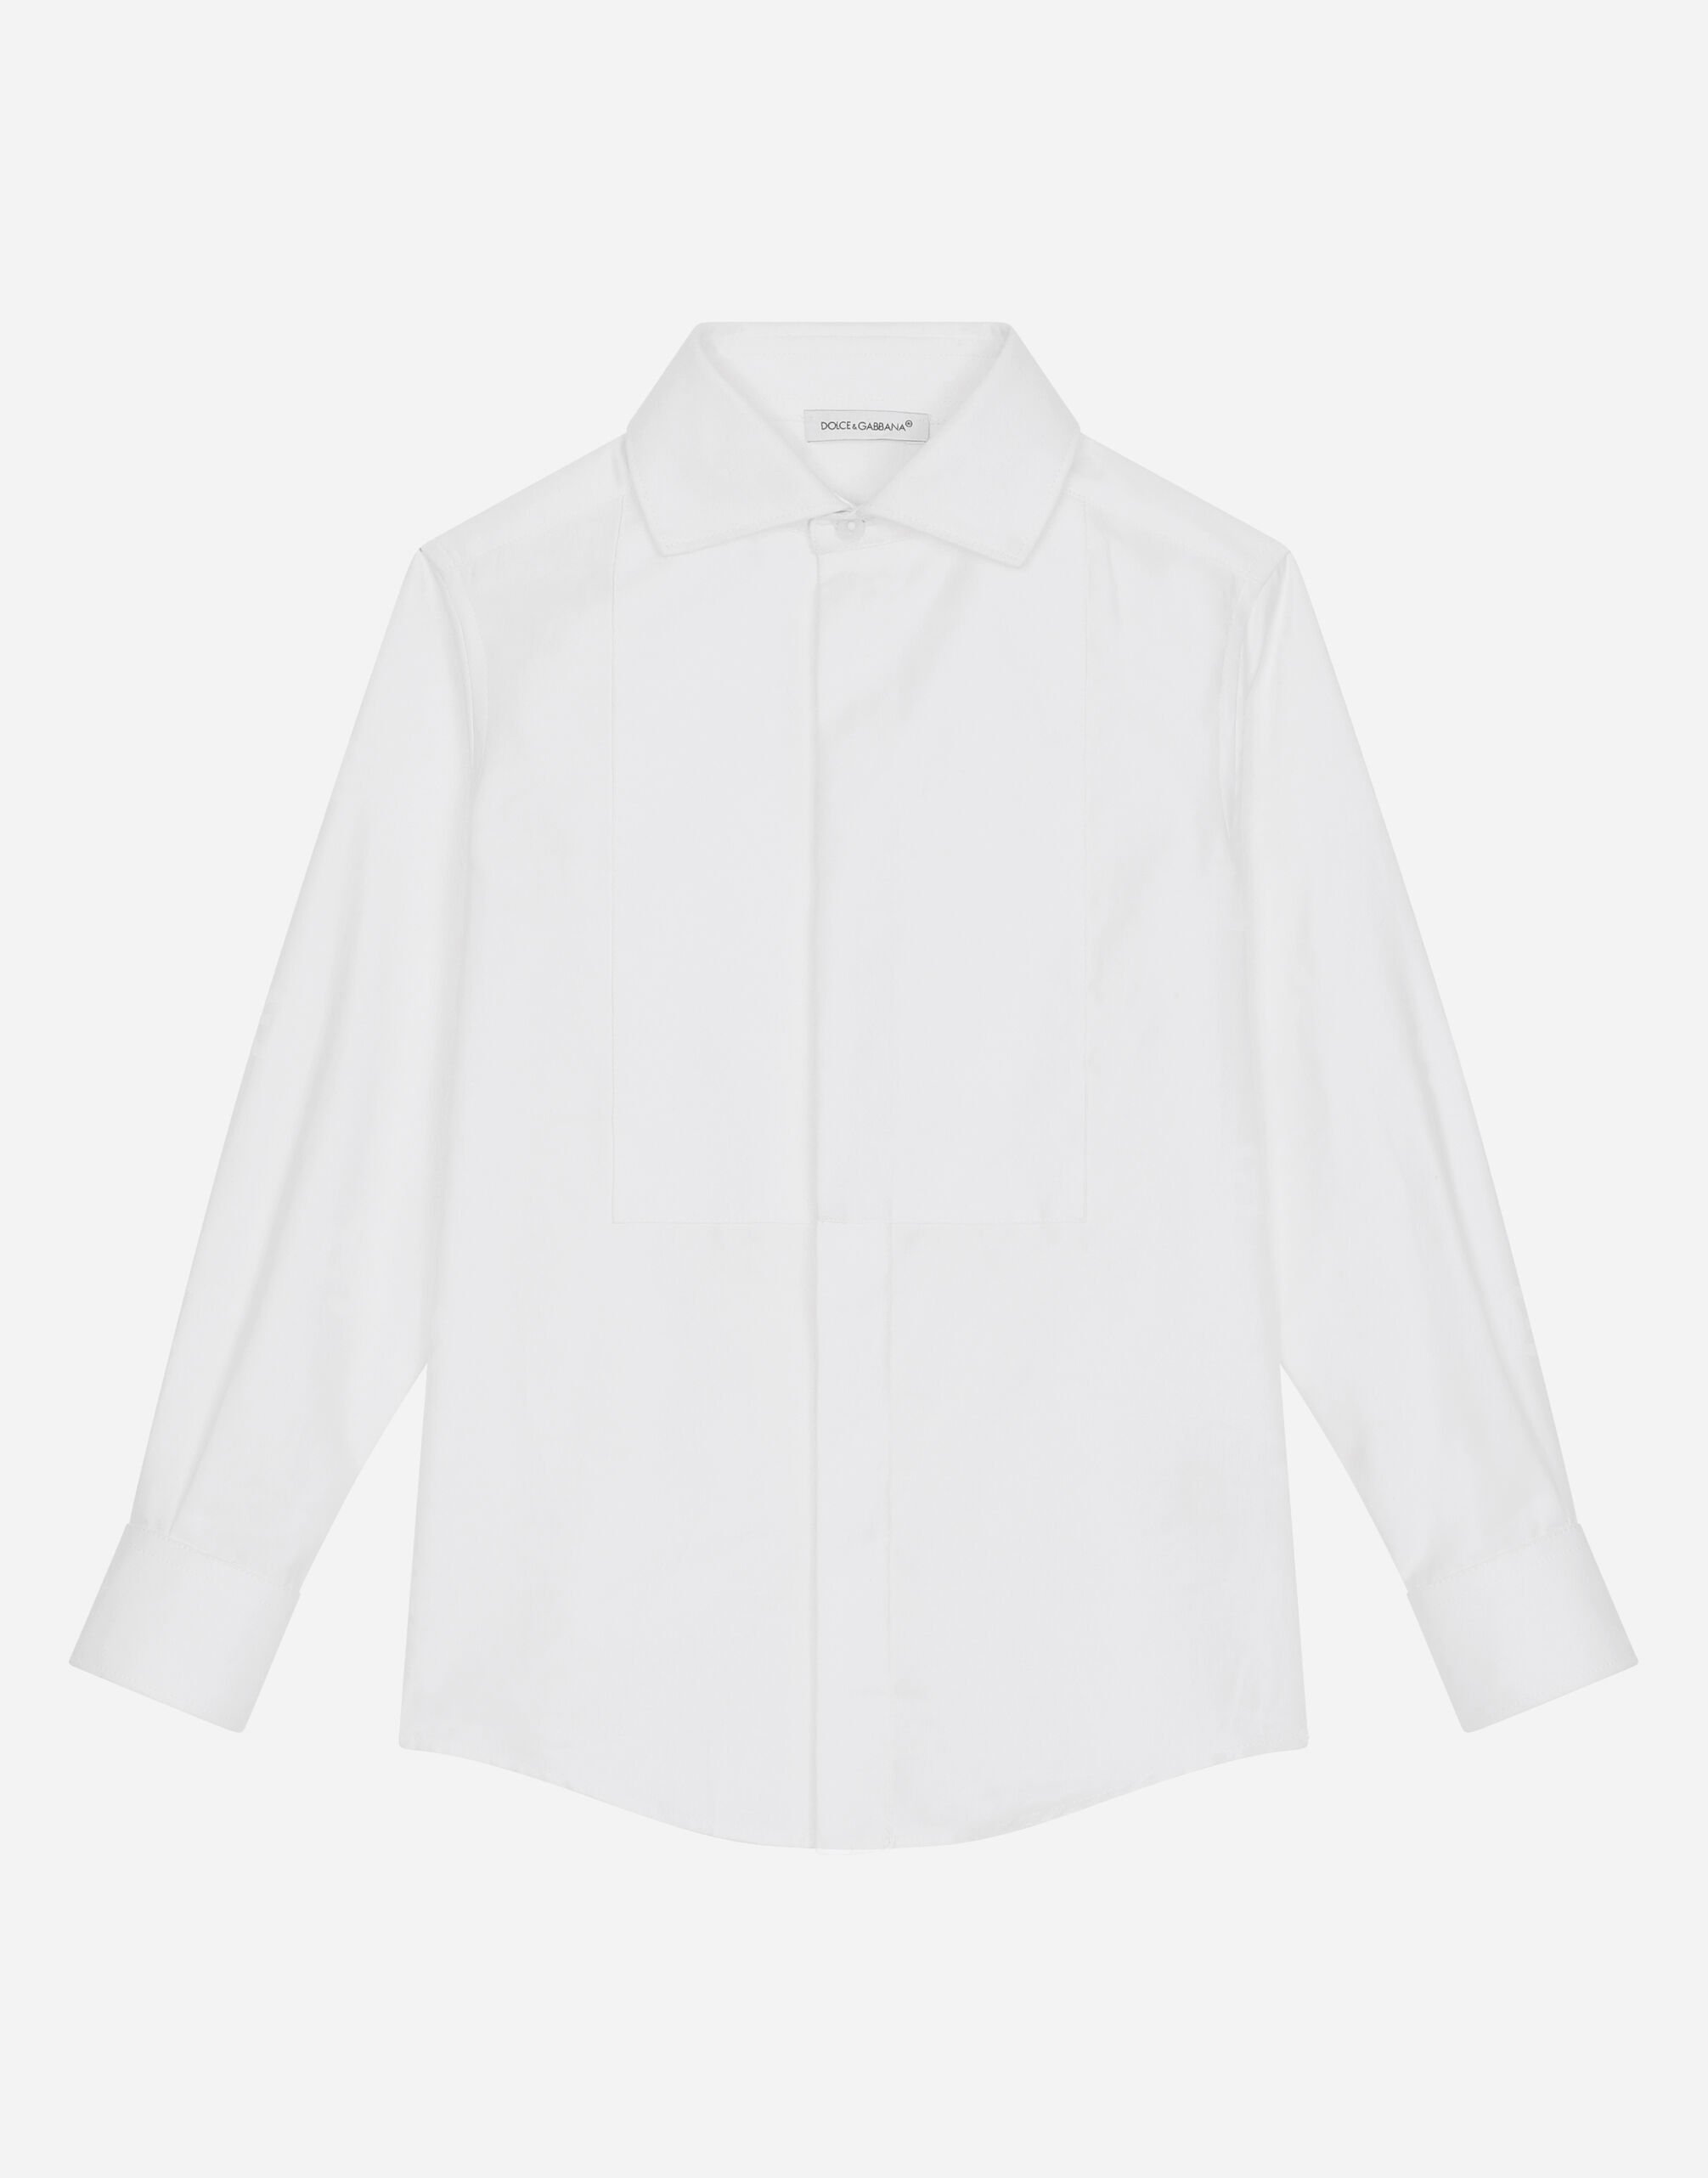 Dolce & Gabbana Poplin jacquard tuxedo shirt with DG logo Print L4JTHQG7L7H